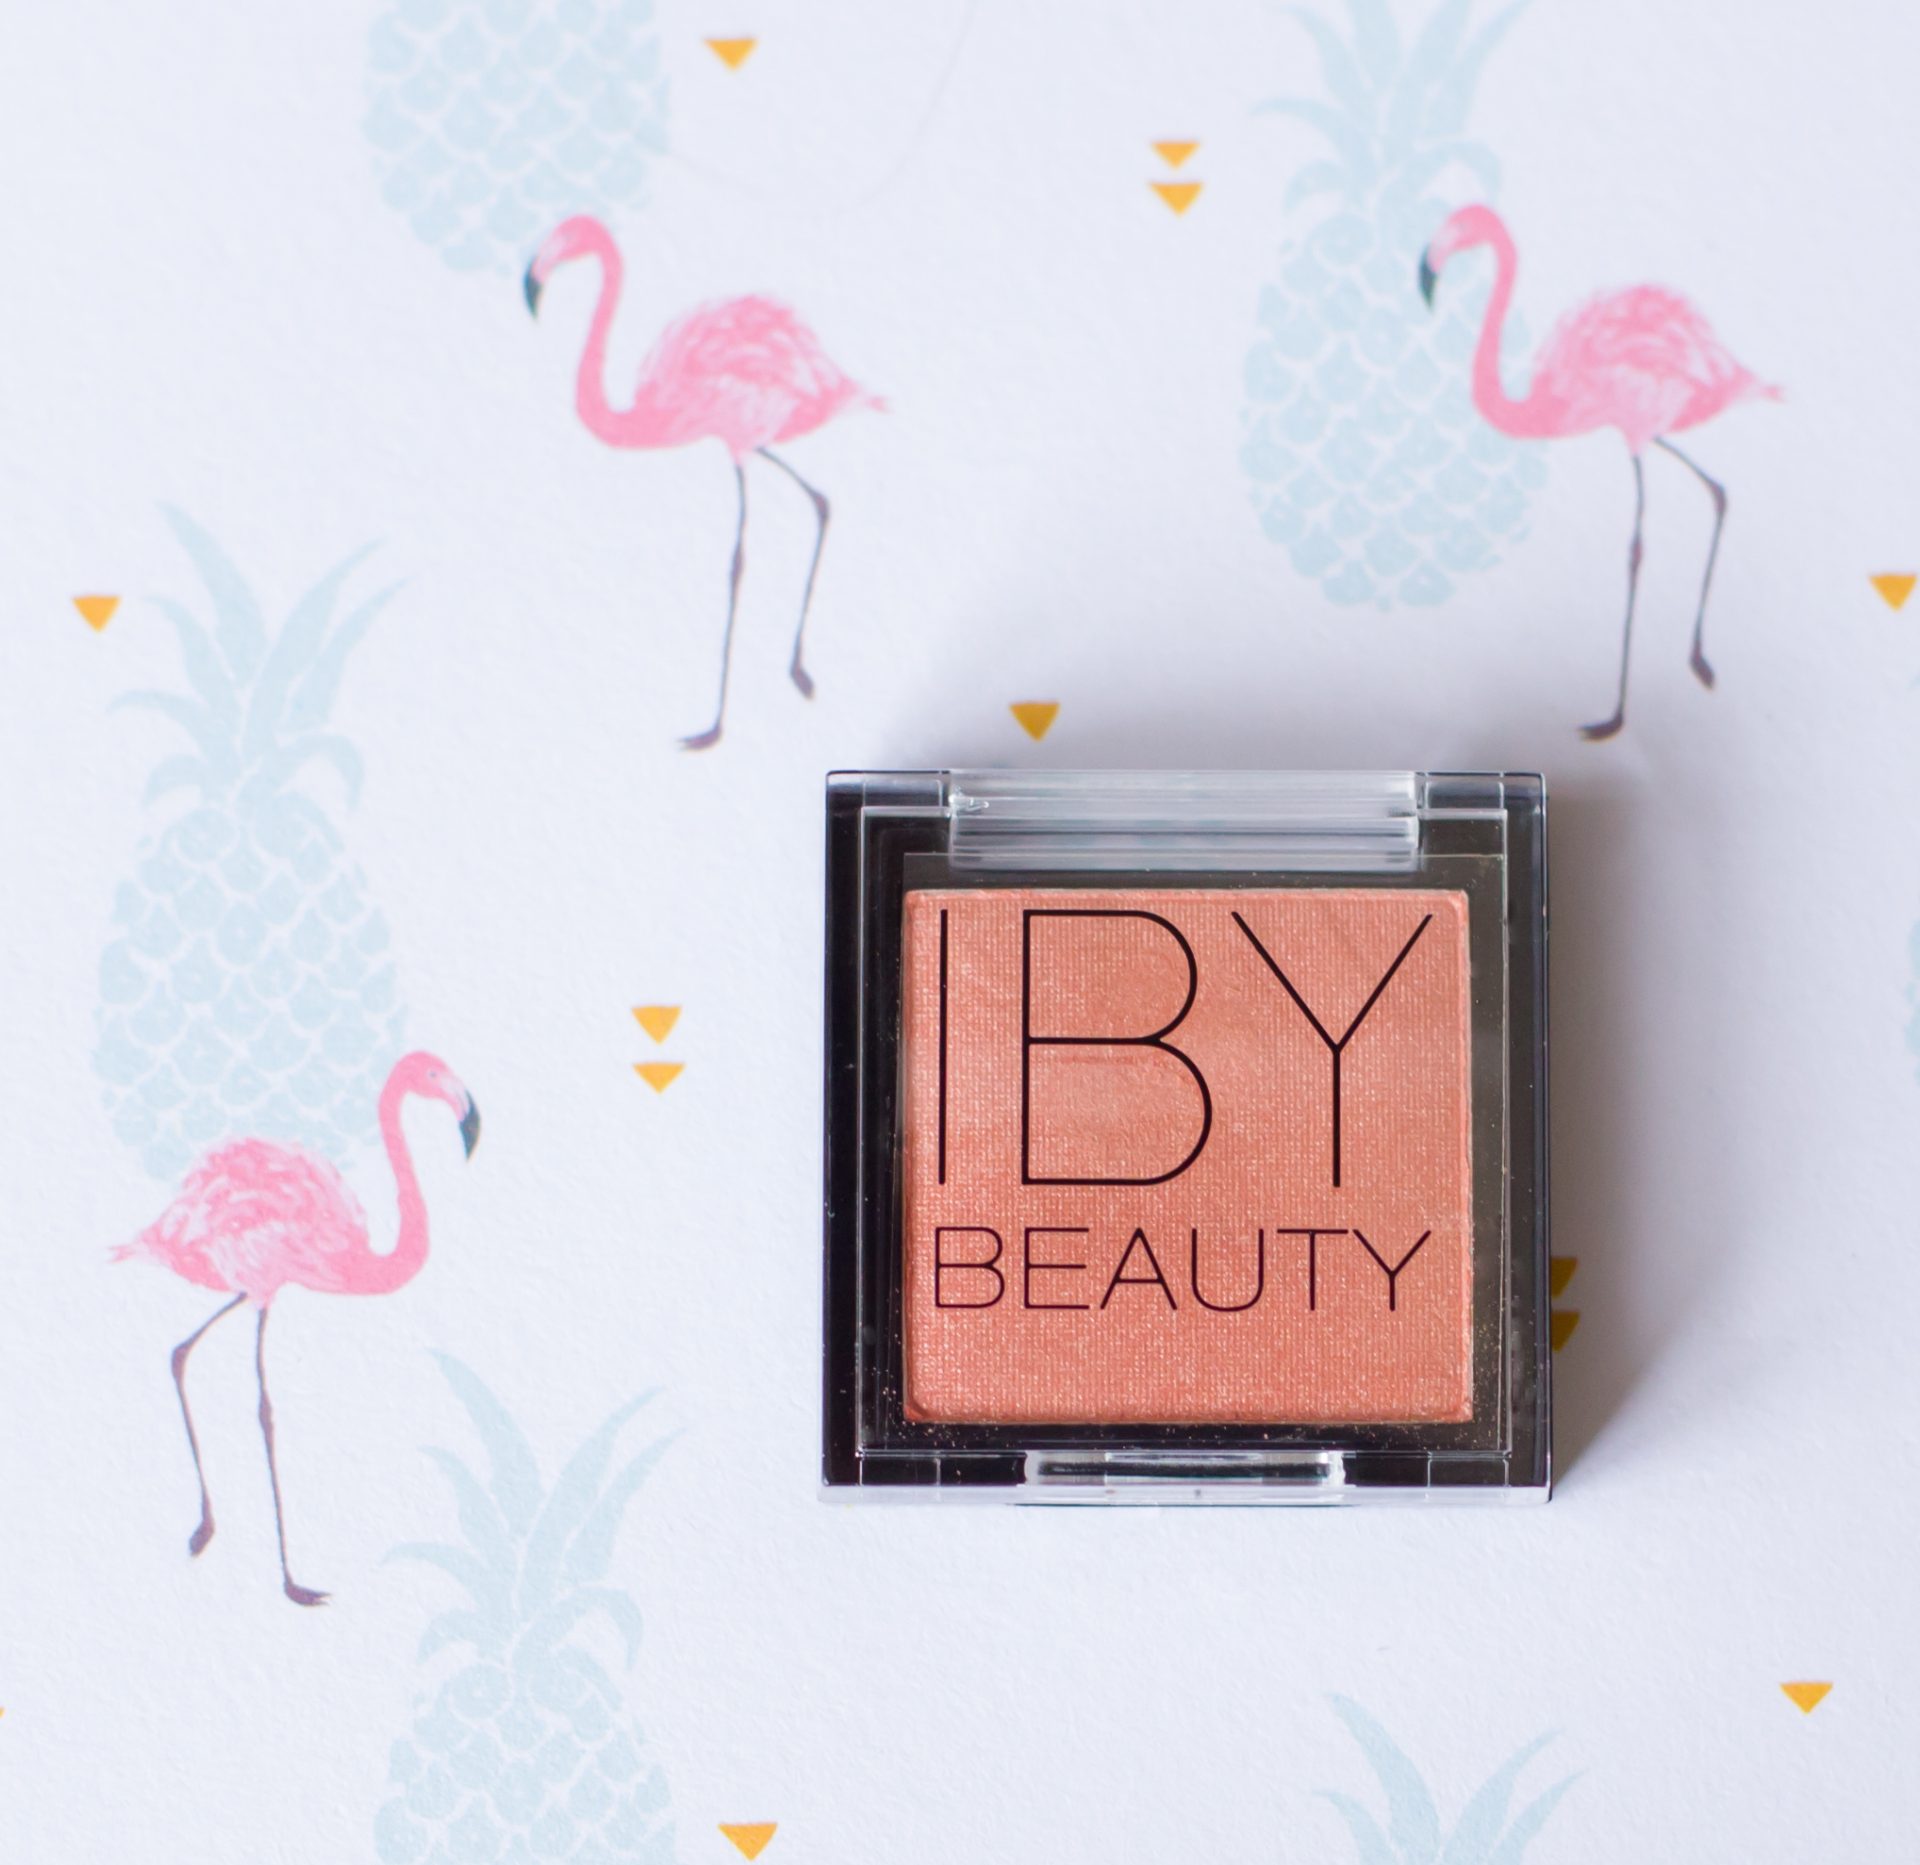 IBY Beauty highlighter - StyleTone box maart 2018